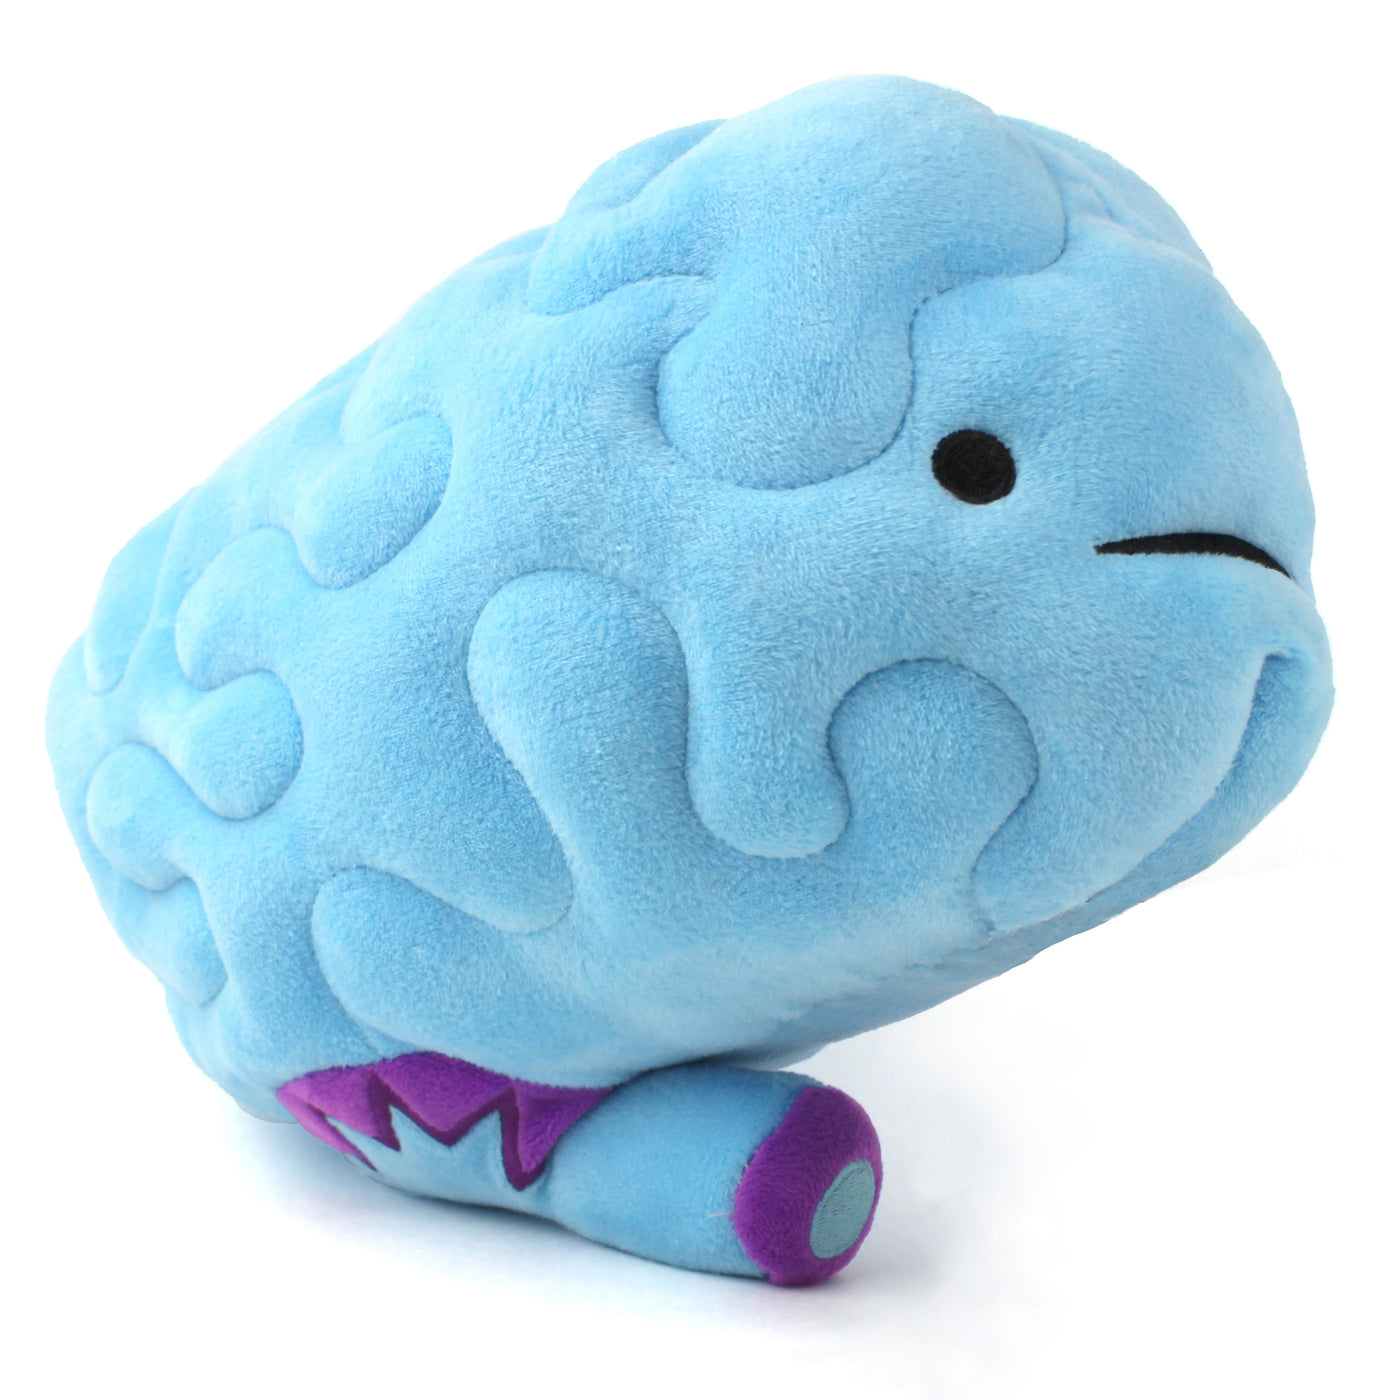 Brain Plushies, Brain Stuffed Animals, and Brain Enamel Pins - I Heart Guts